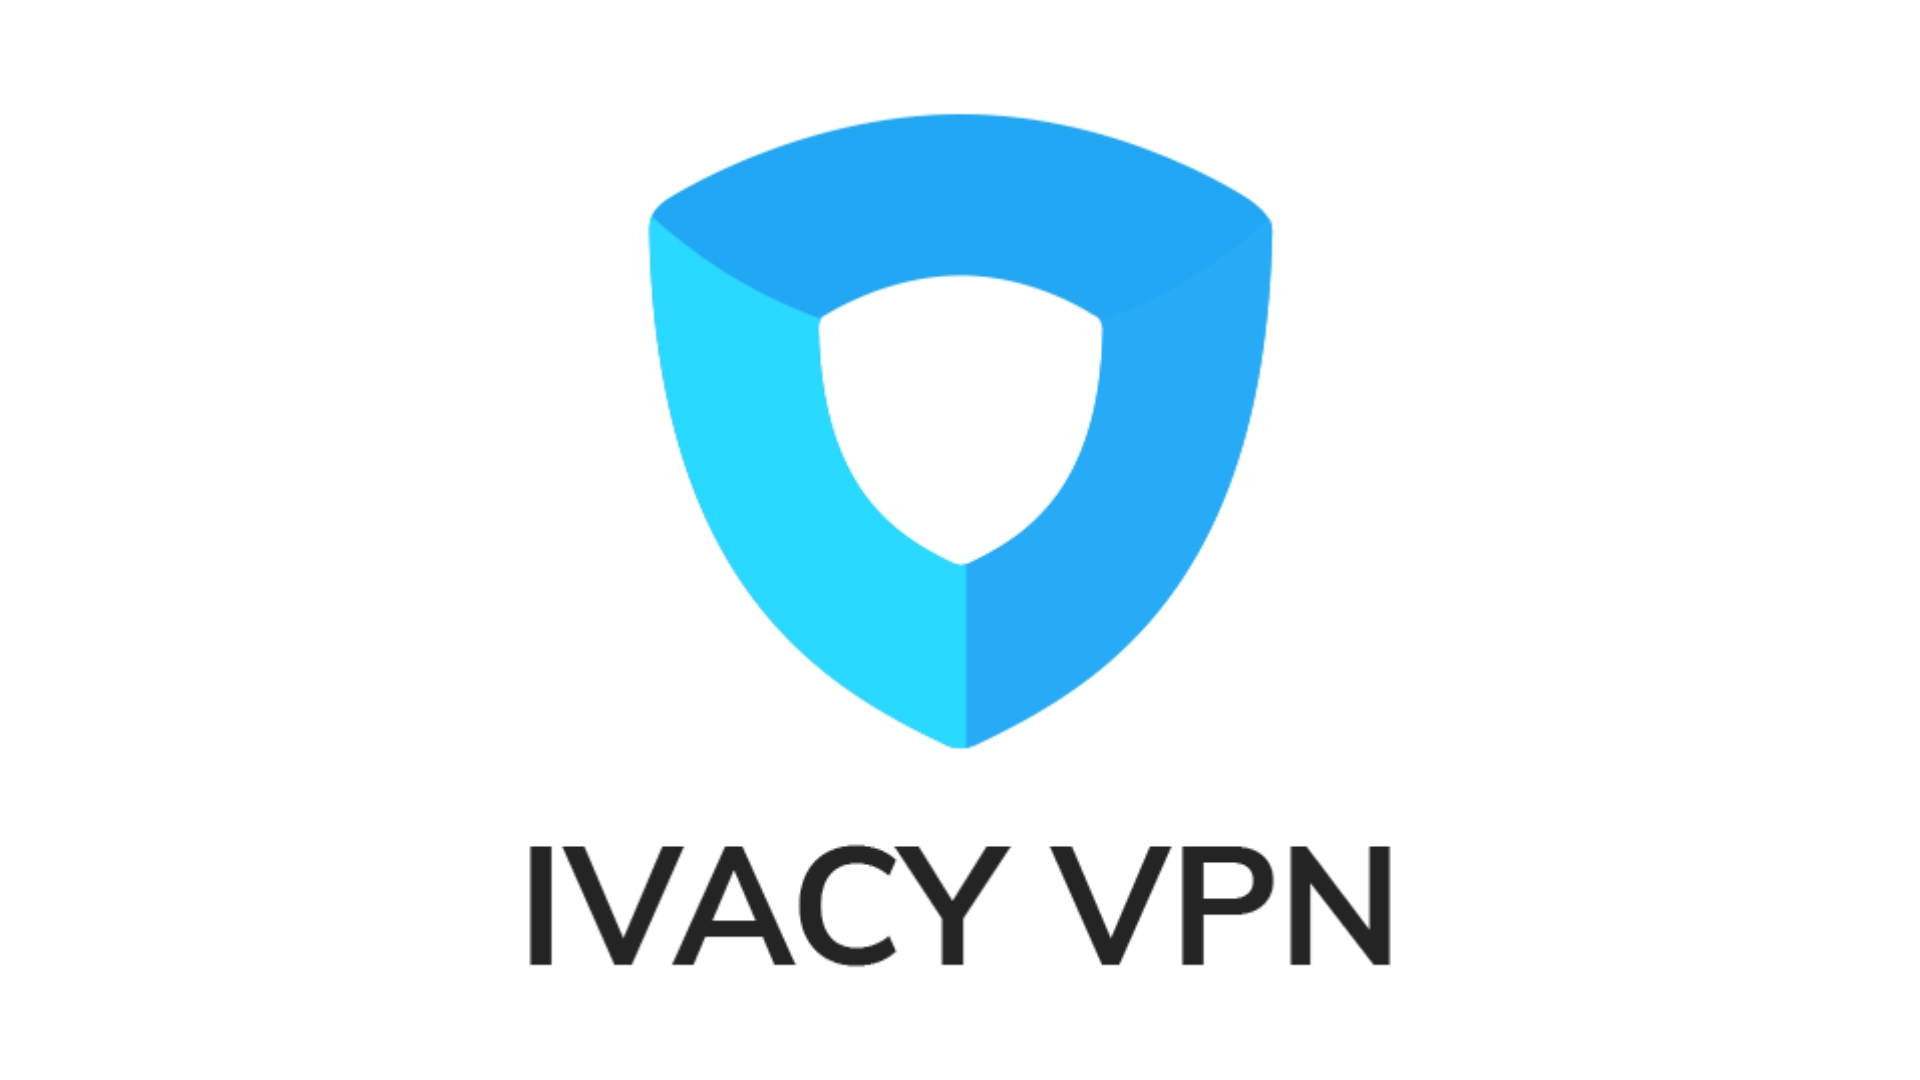 VPN deals: Ivacy VPN -image shows the company's logo